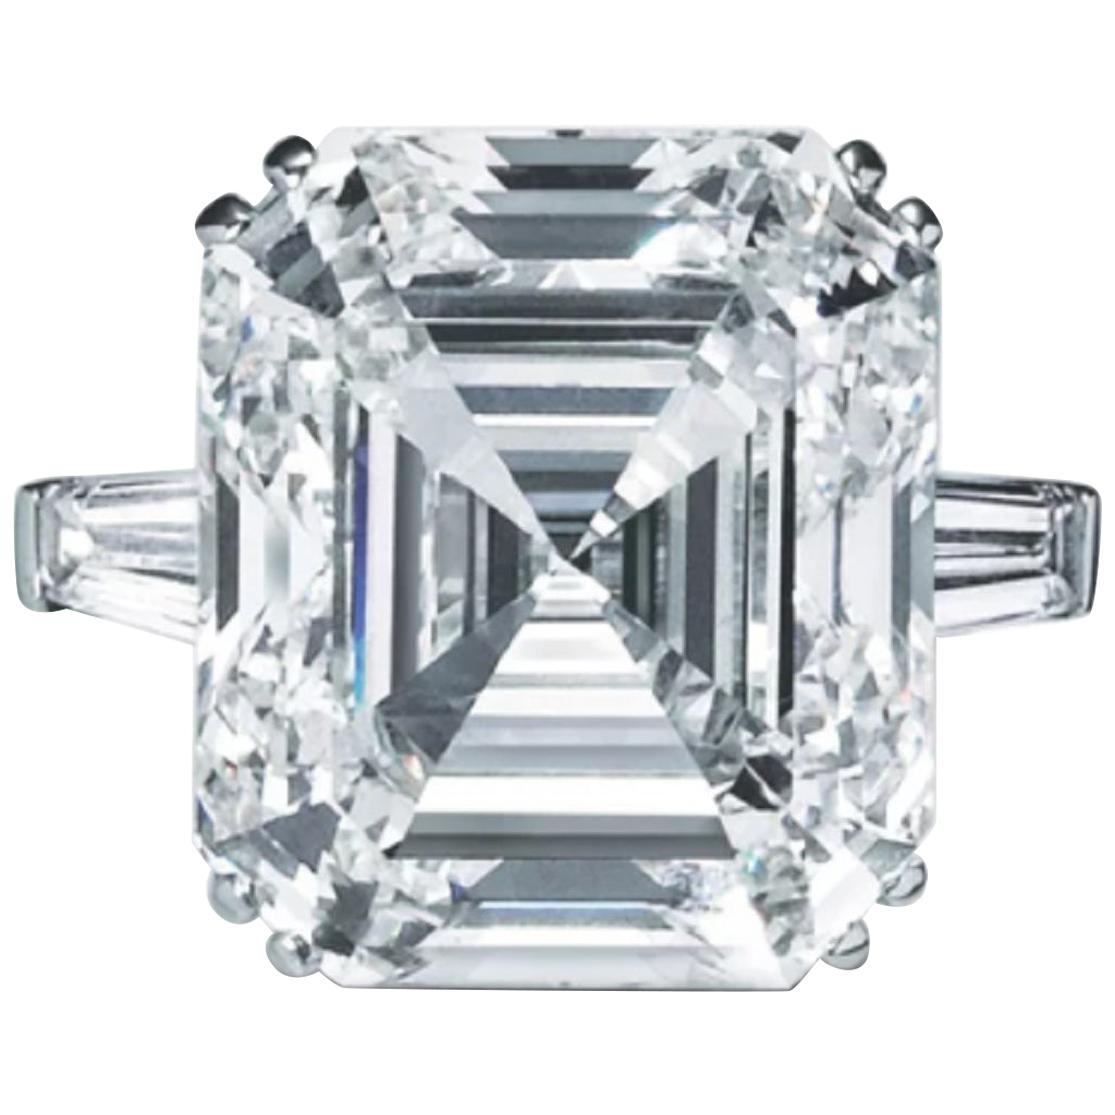 GIA Certified 9.02 Carat Asscher Cut Diamond VS1 Clarity I Color